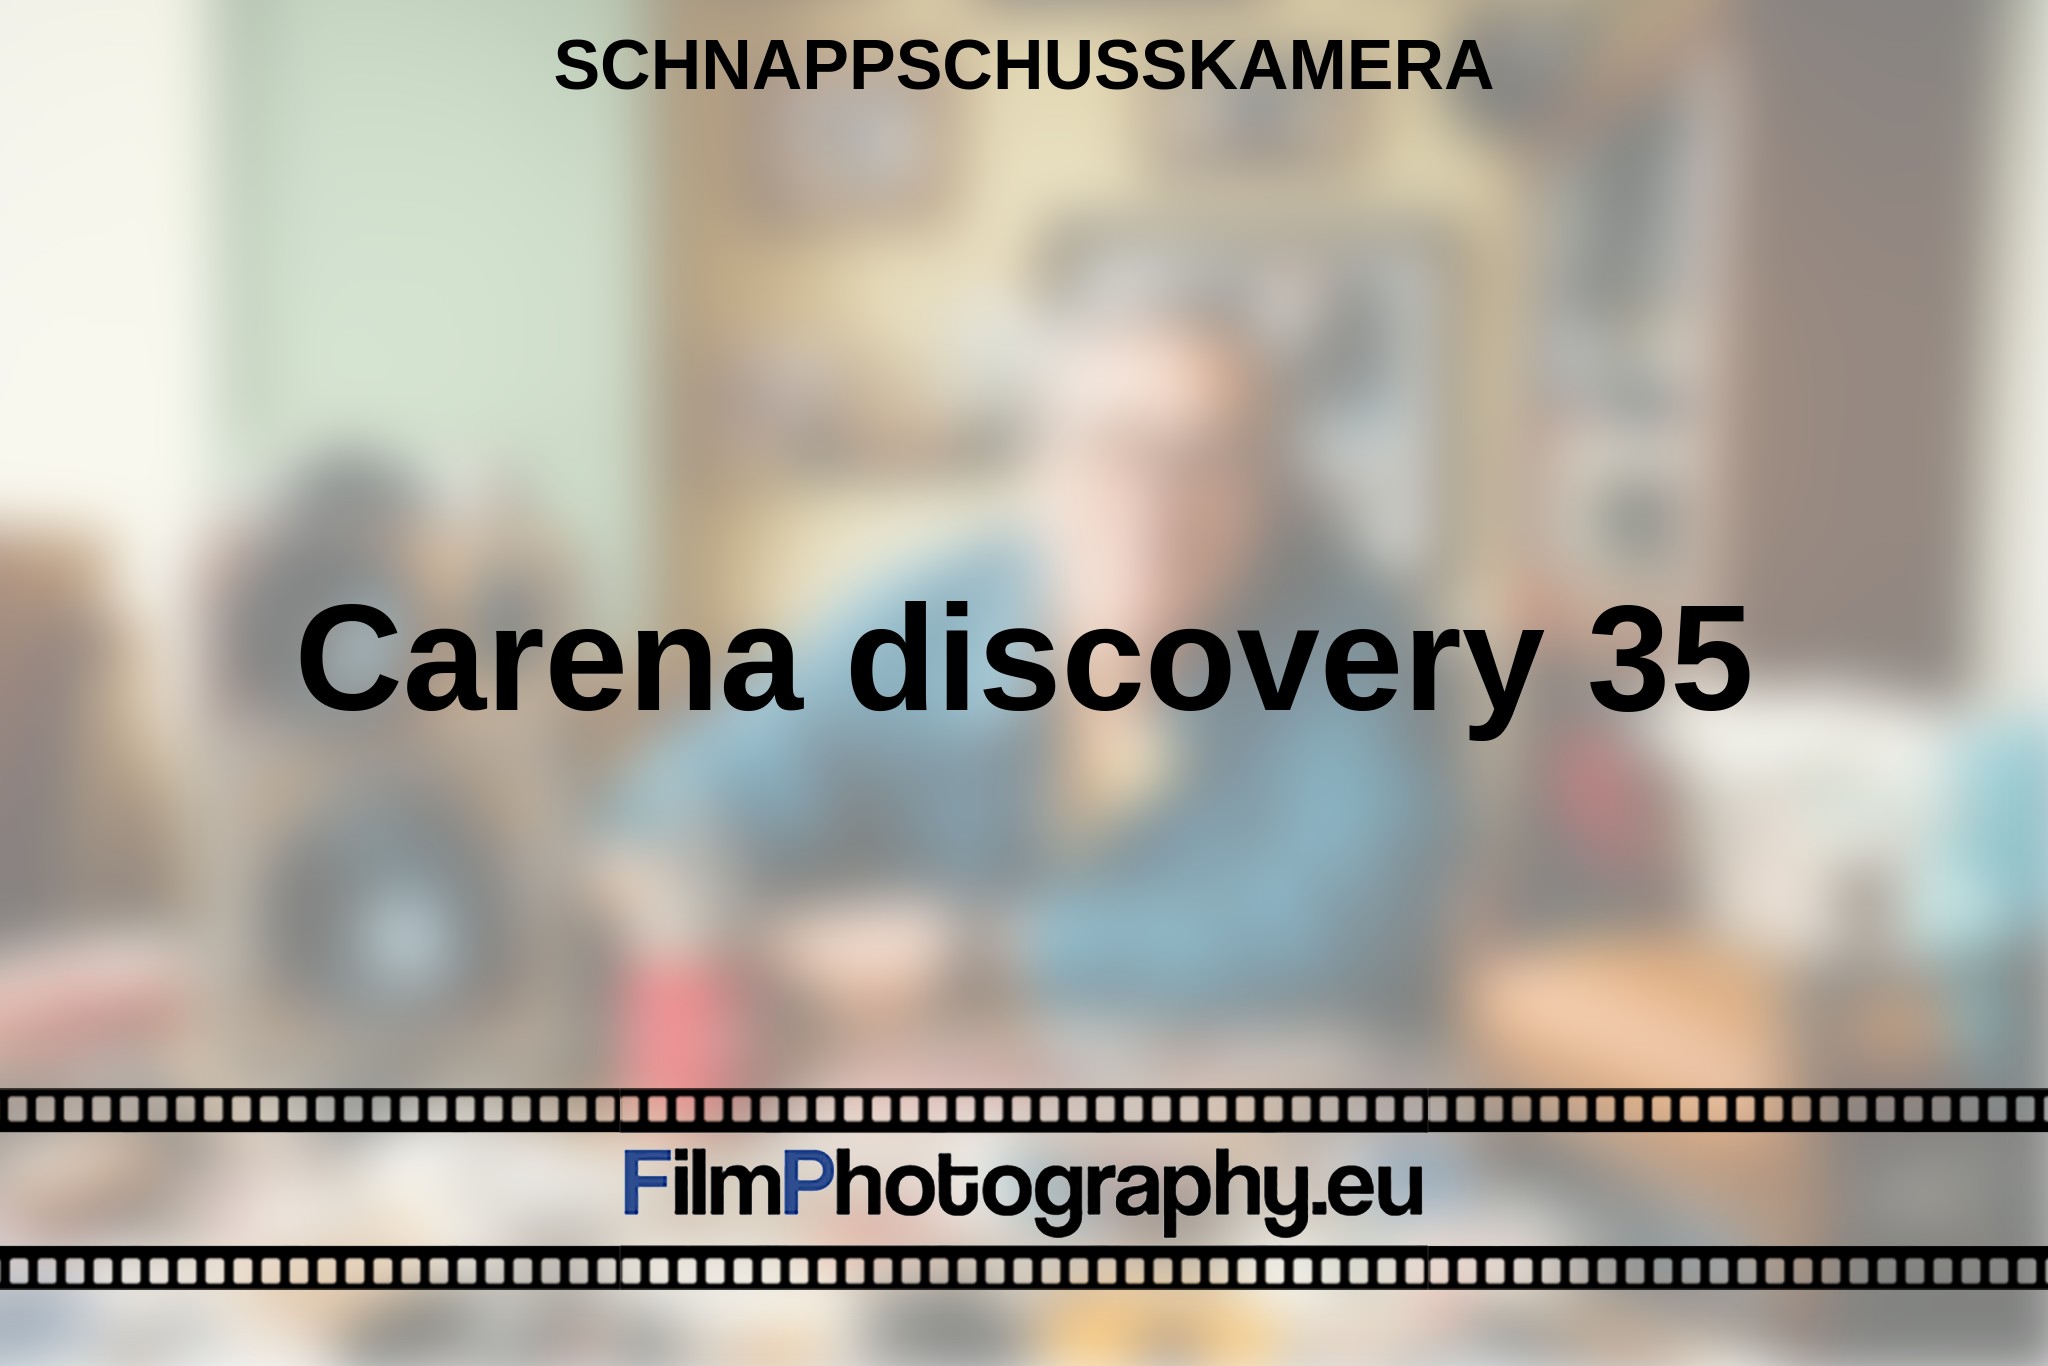 carena-discovery-35-schnappschusskamera-bnv.jpg